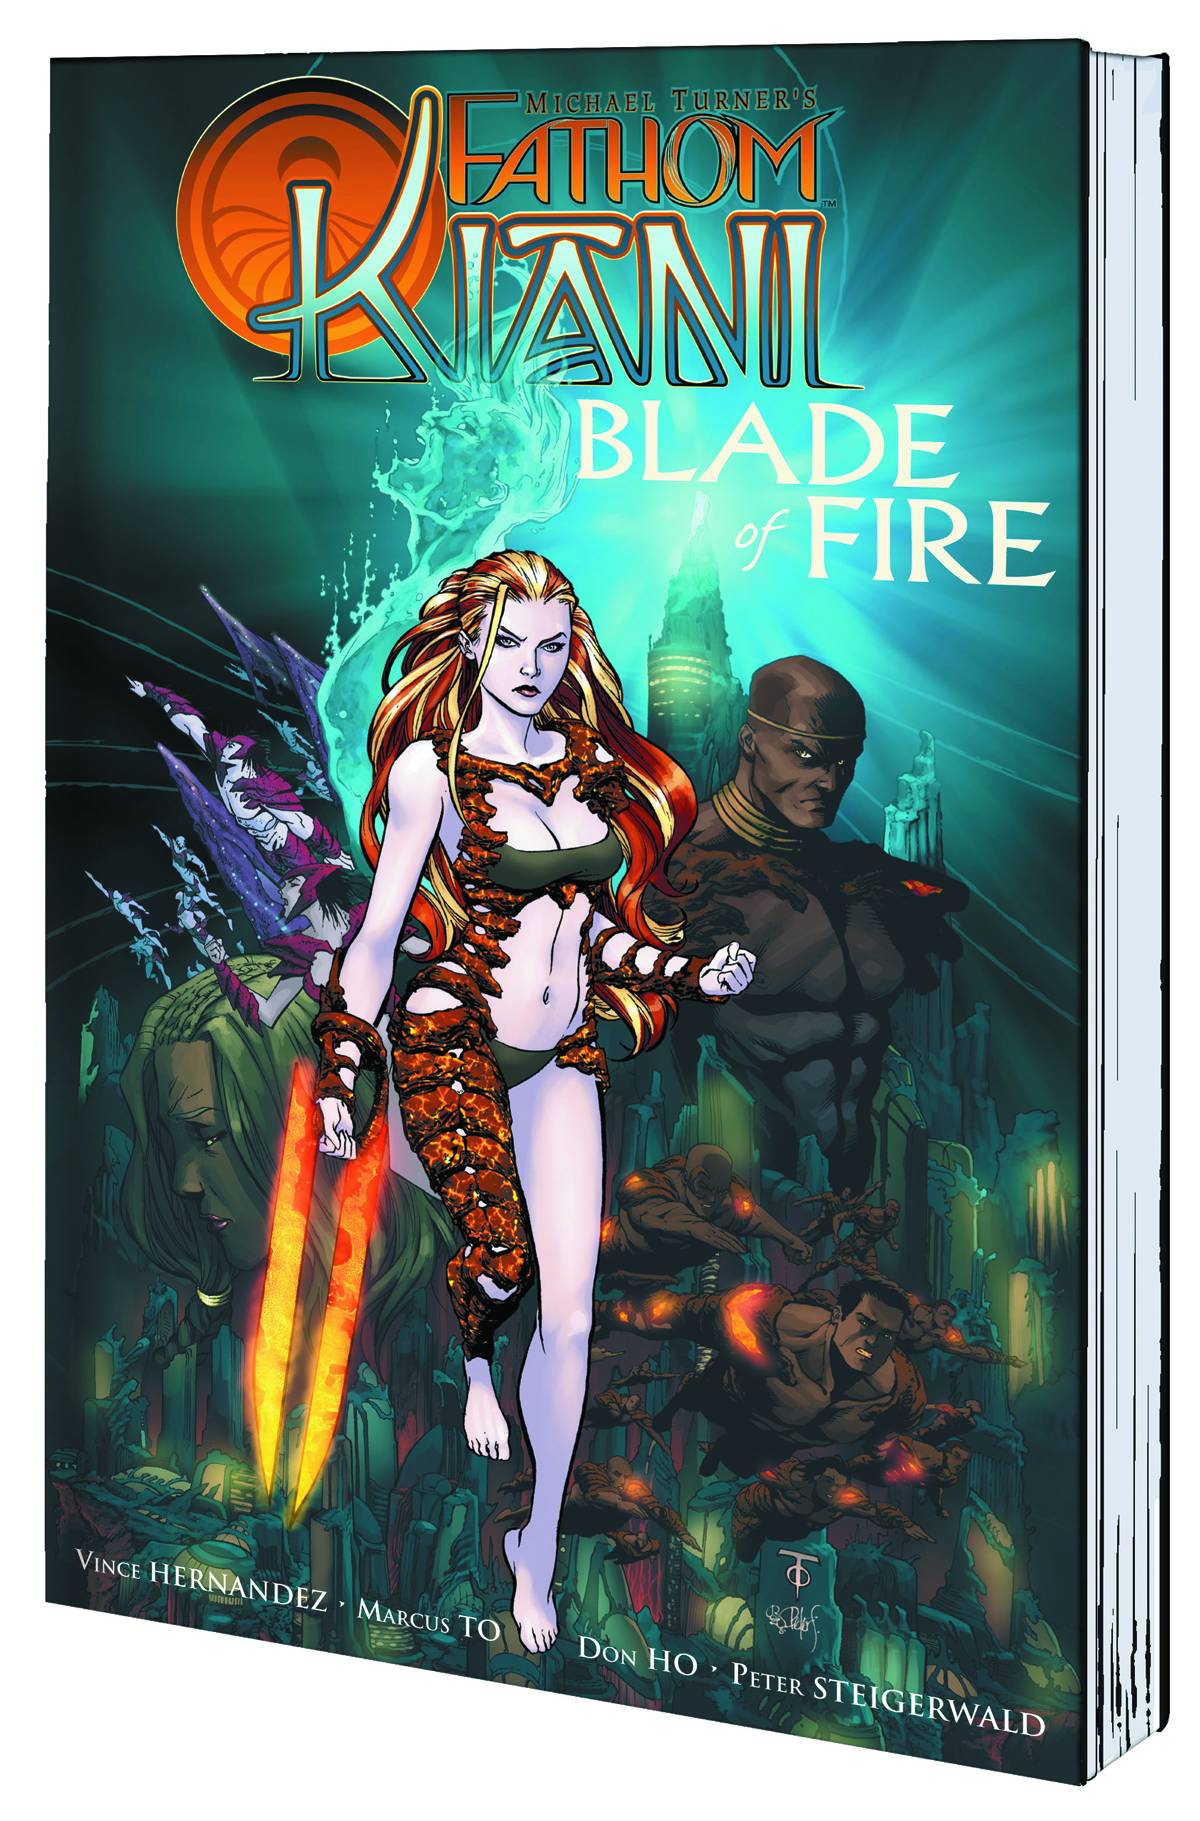 Fathom Kiani Graphic Novel Volume 1 Blade of Fire